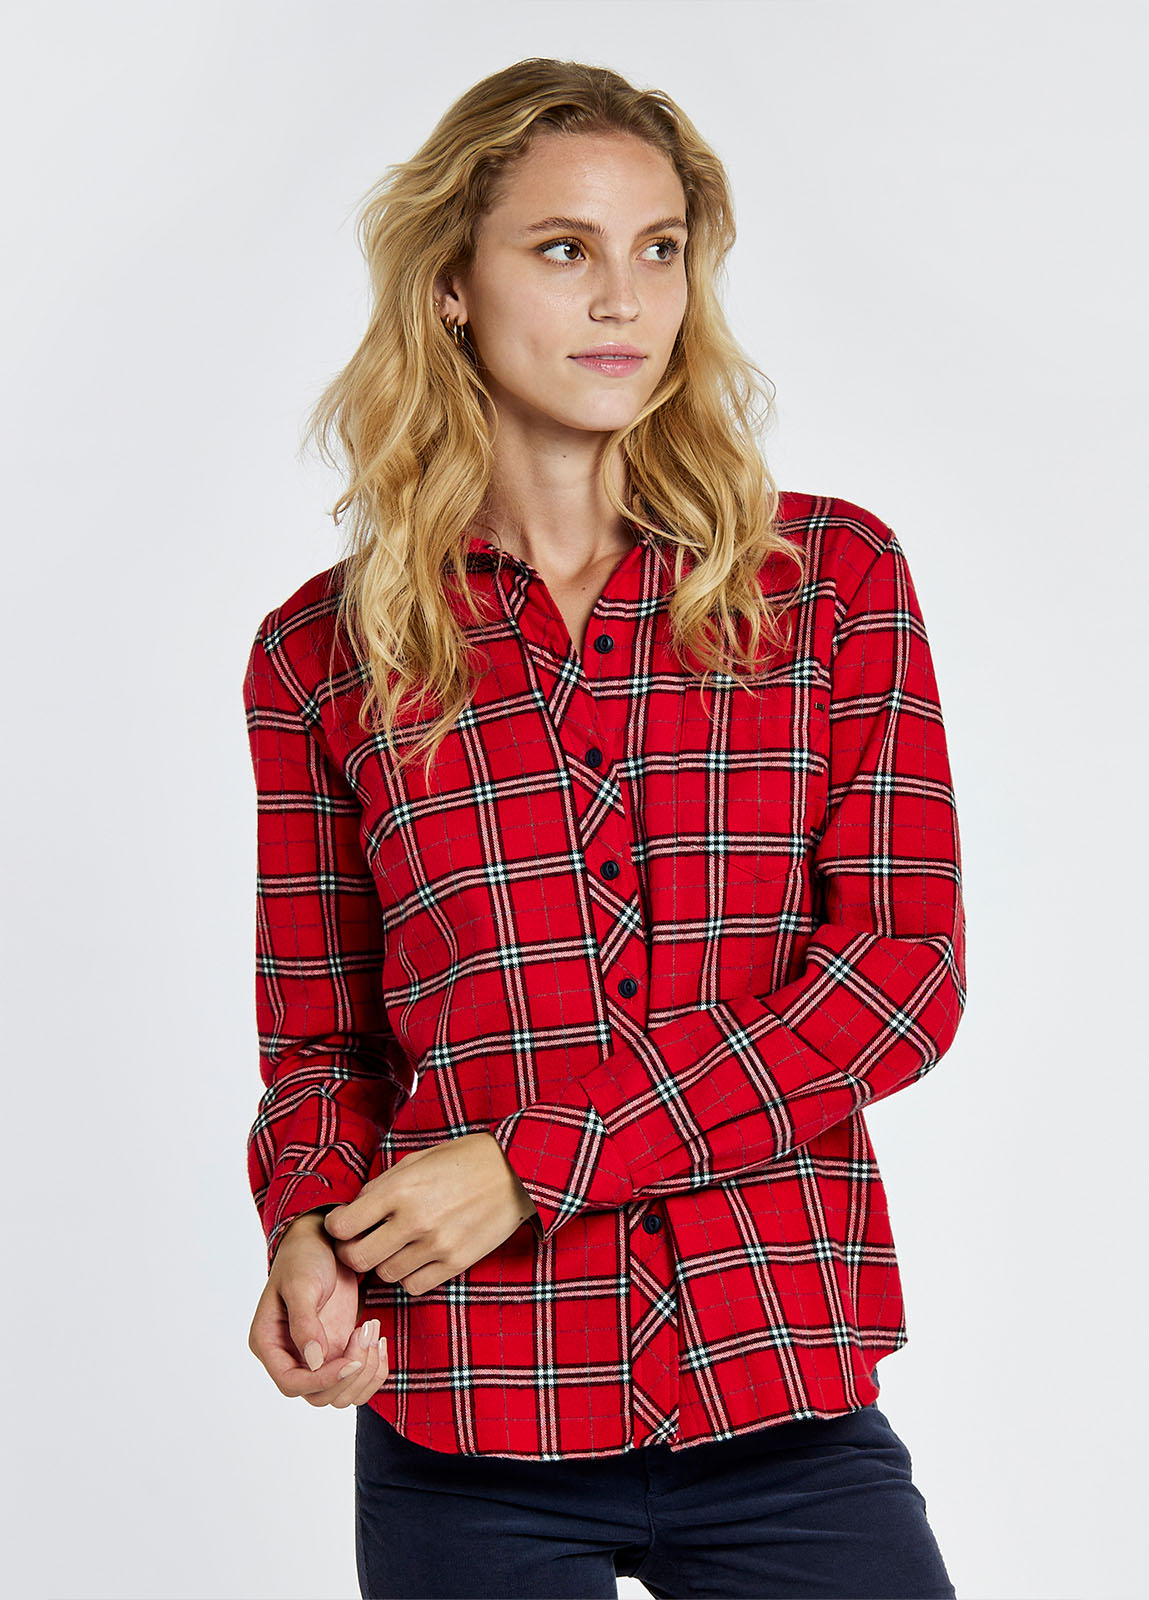 Beautifully designed Dubarry of | for Women - Dubarry Shirts USA Ireland